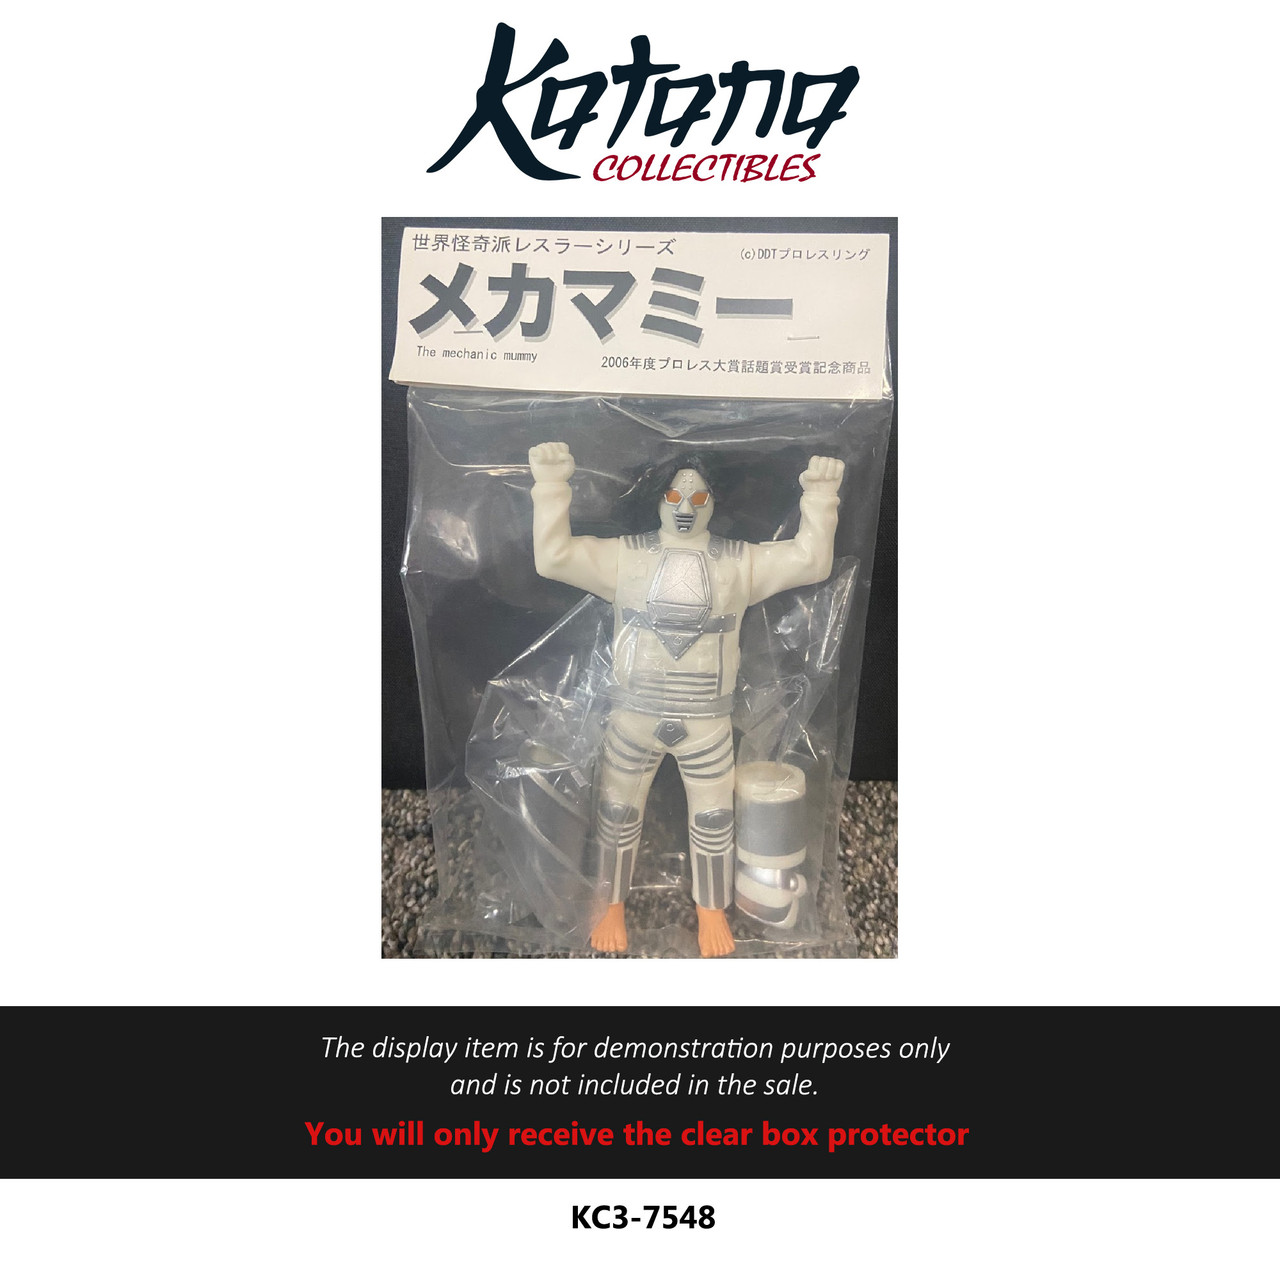 Katana Collectibles Protector For Mechanic Mummy Action Figure